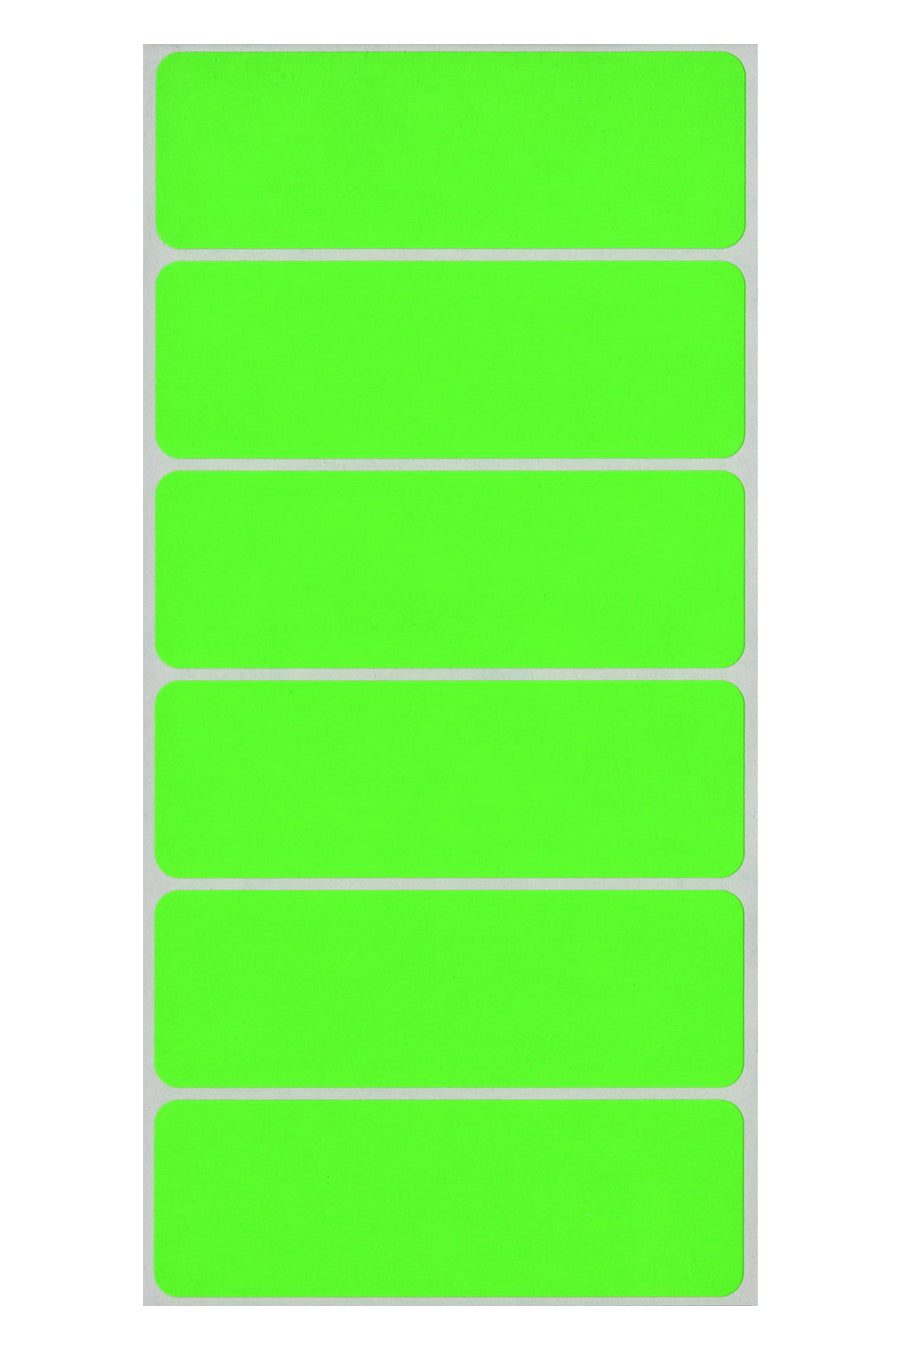 1" x 3" Color Coding Labels, Green Neon, 200/Bx